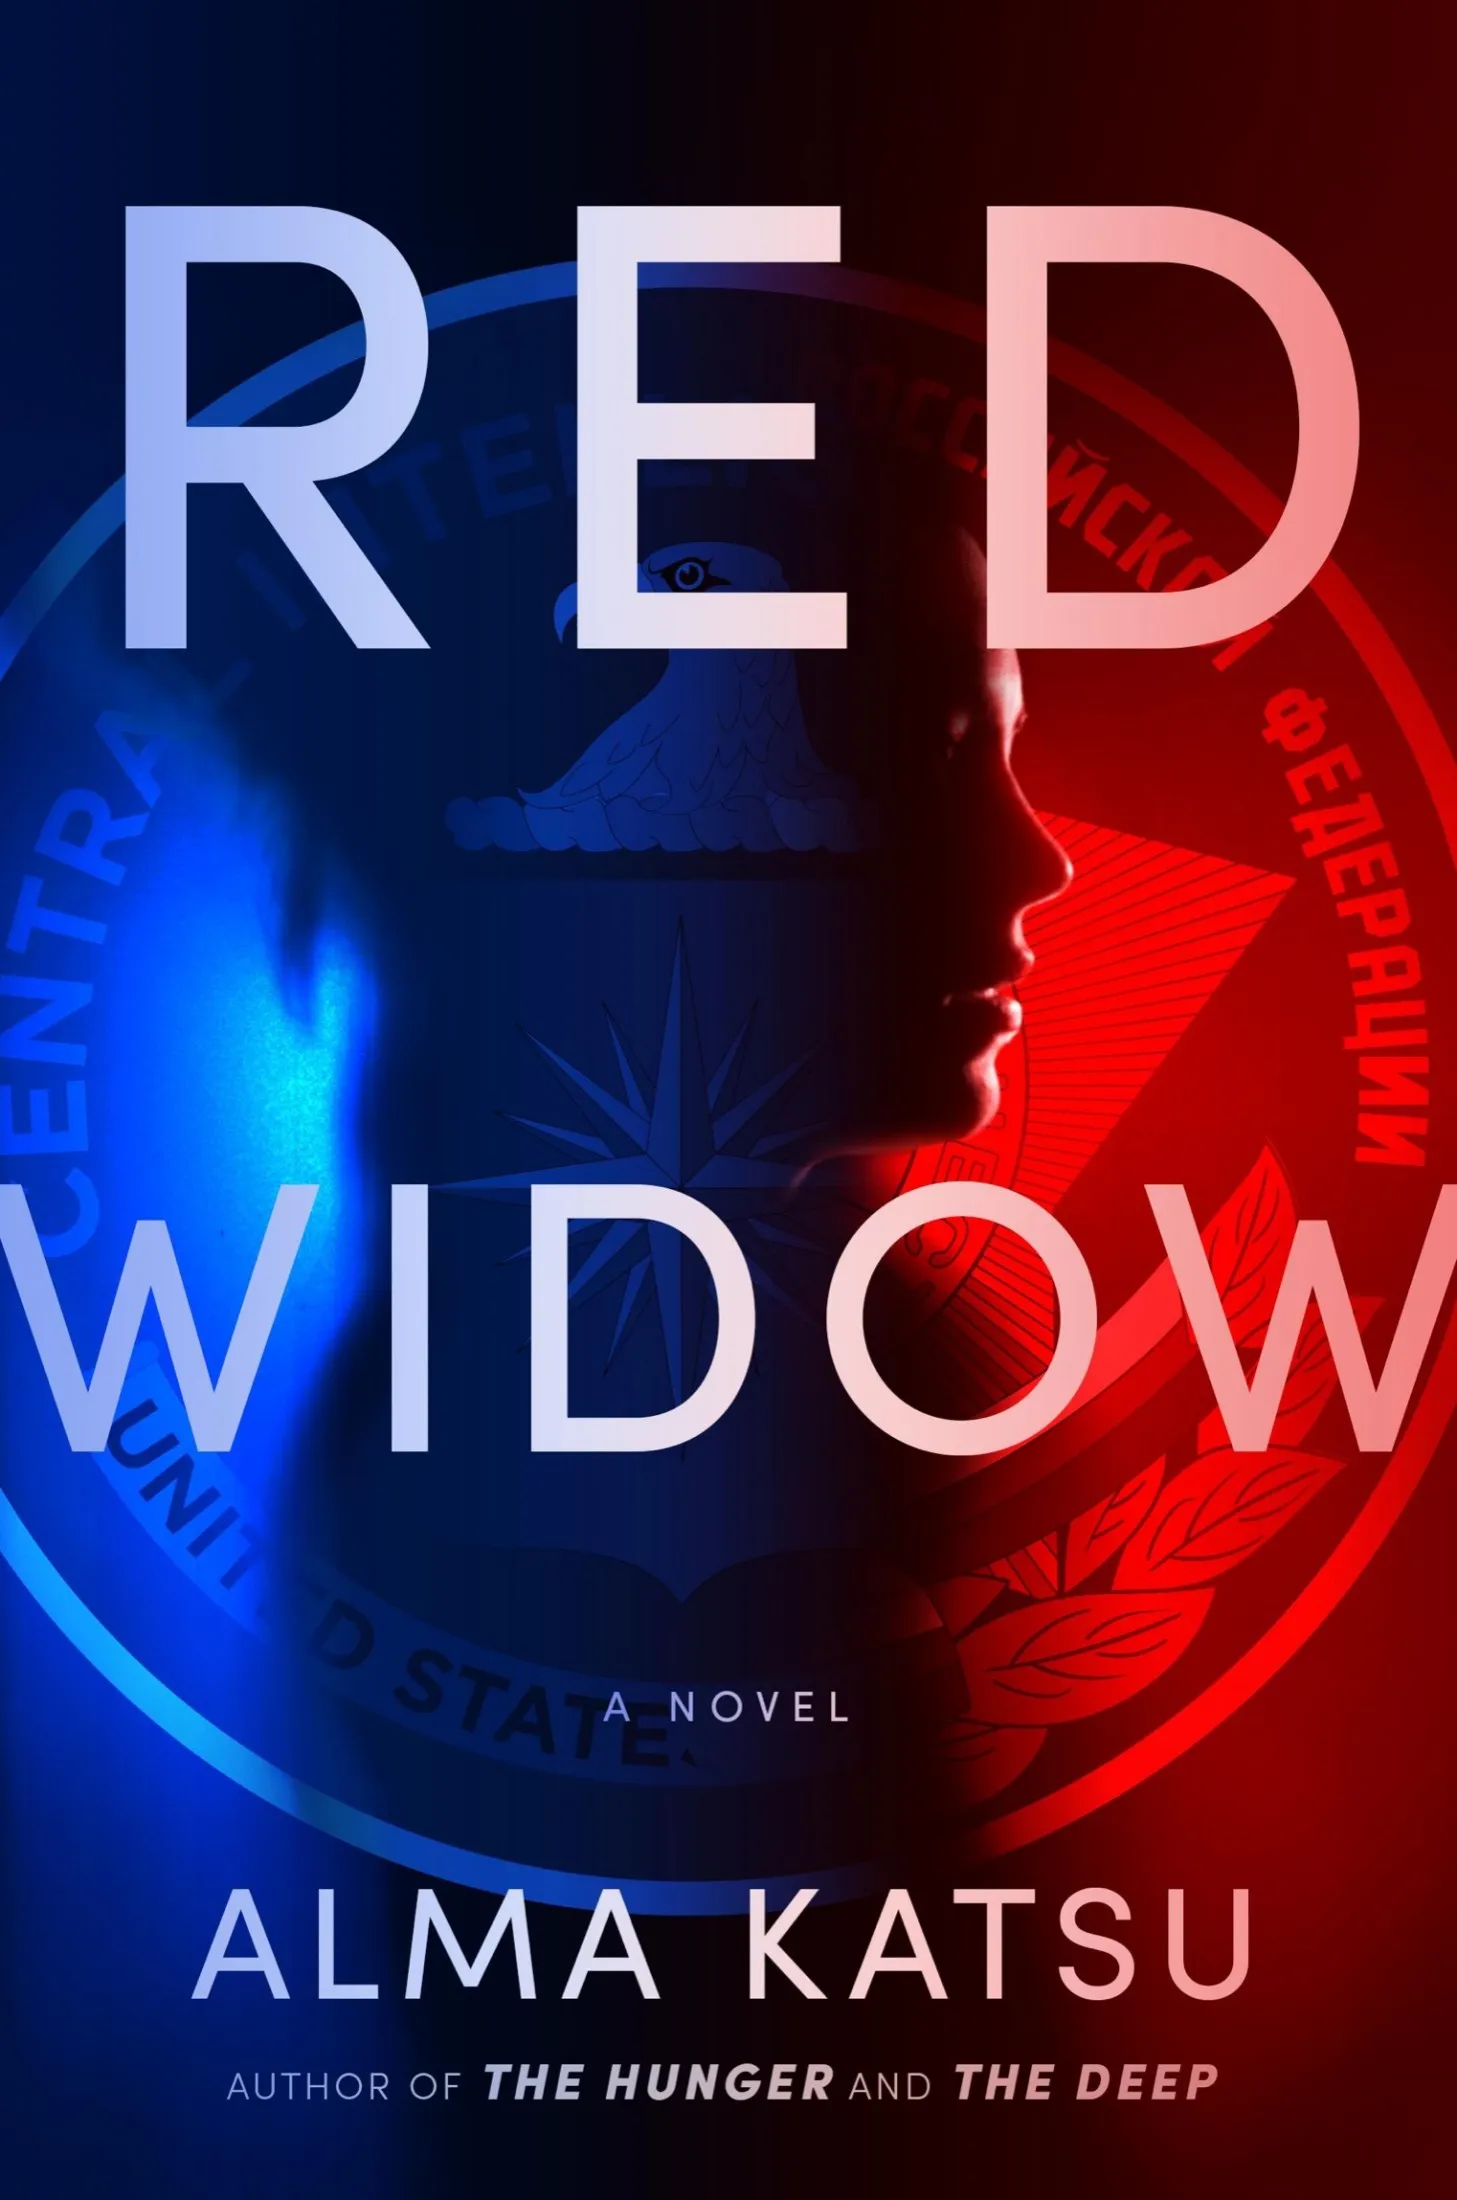 Red Widow (Red Widow #1)